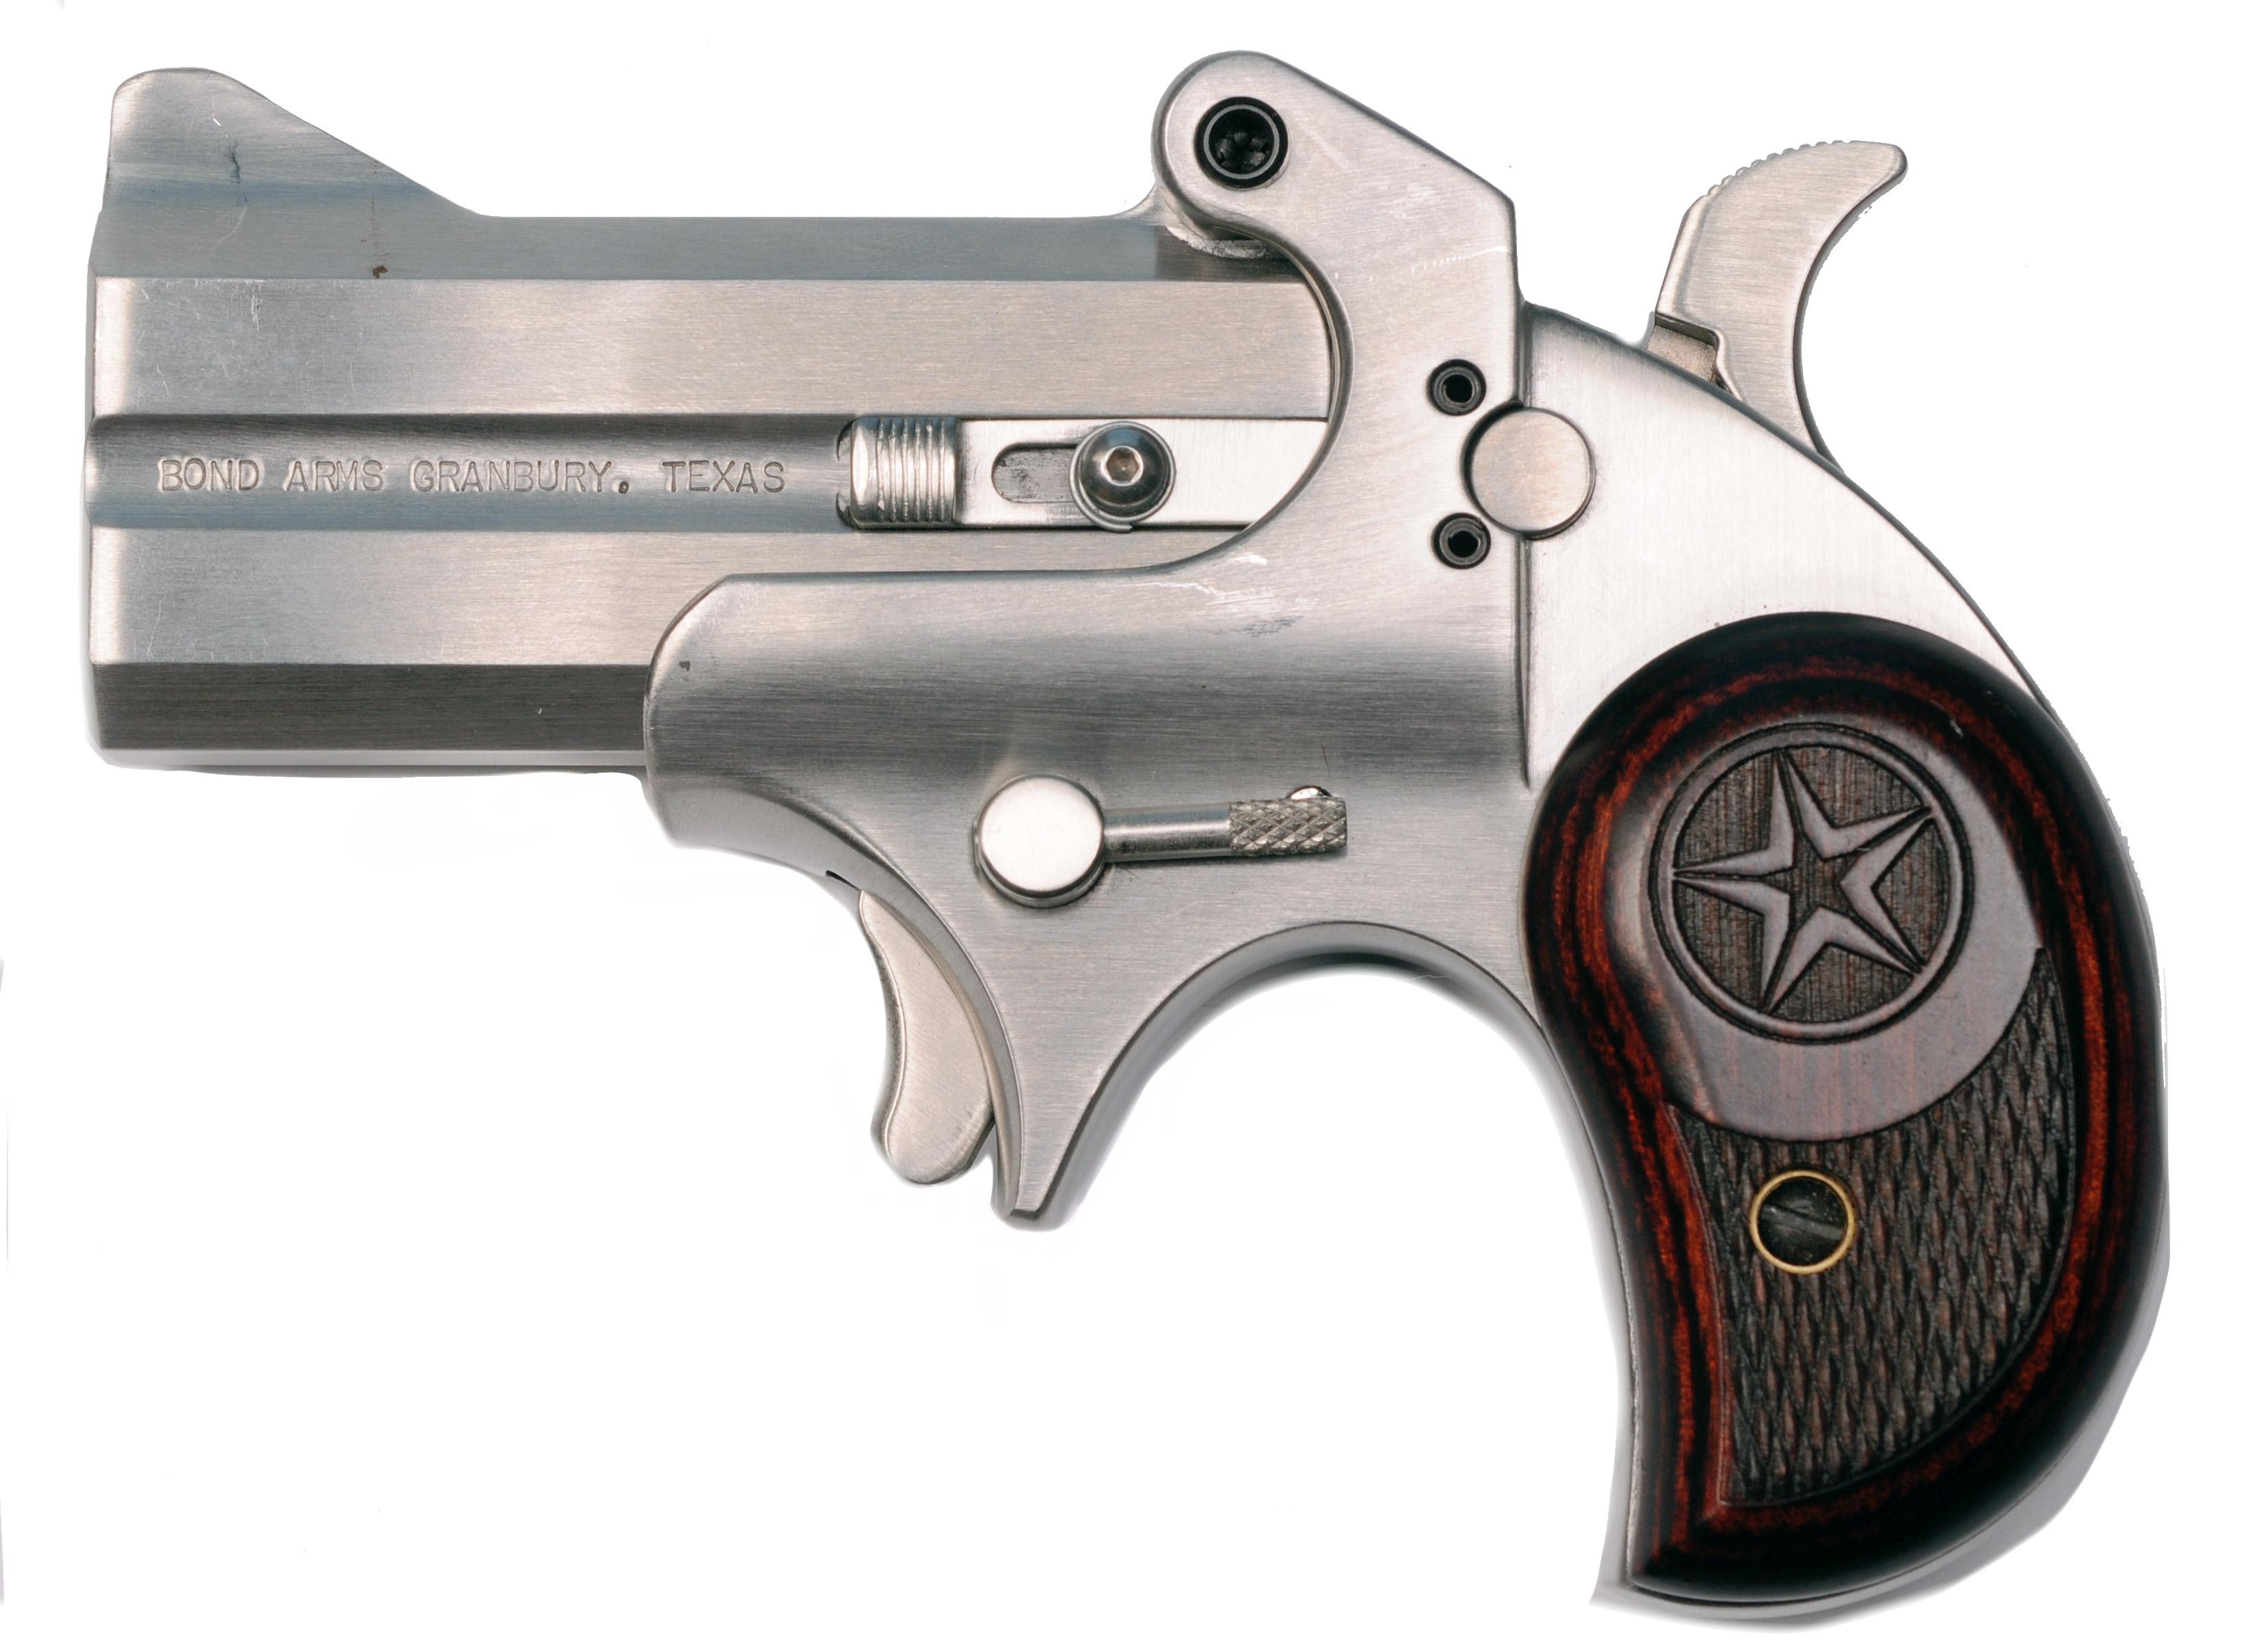 Scarce Bond Arms Cowboy Defender .45 Colt/.410 Break-Open Derringer - FFL #83706 (THC 1)